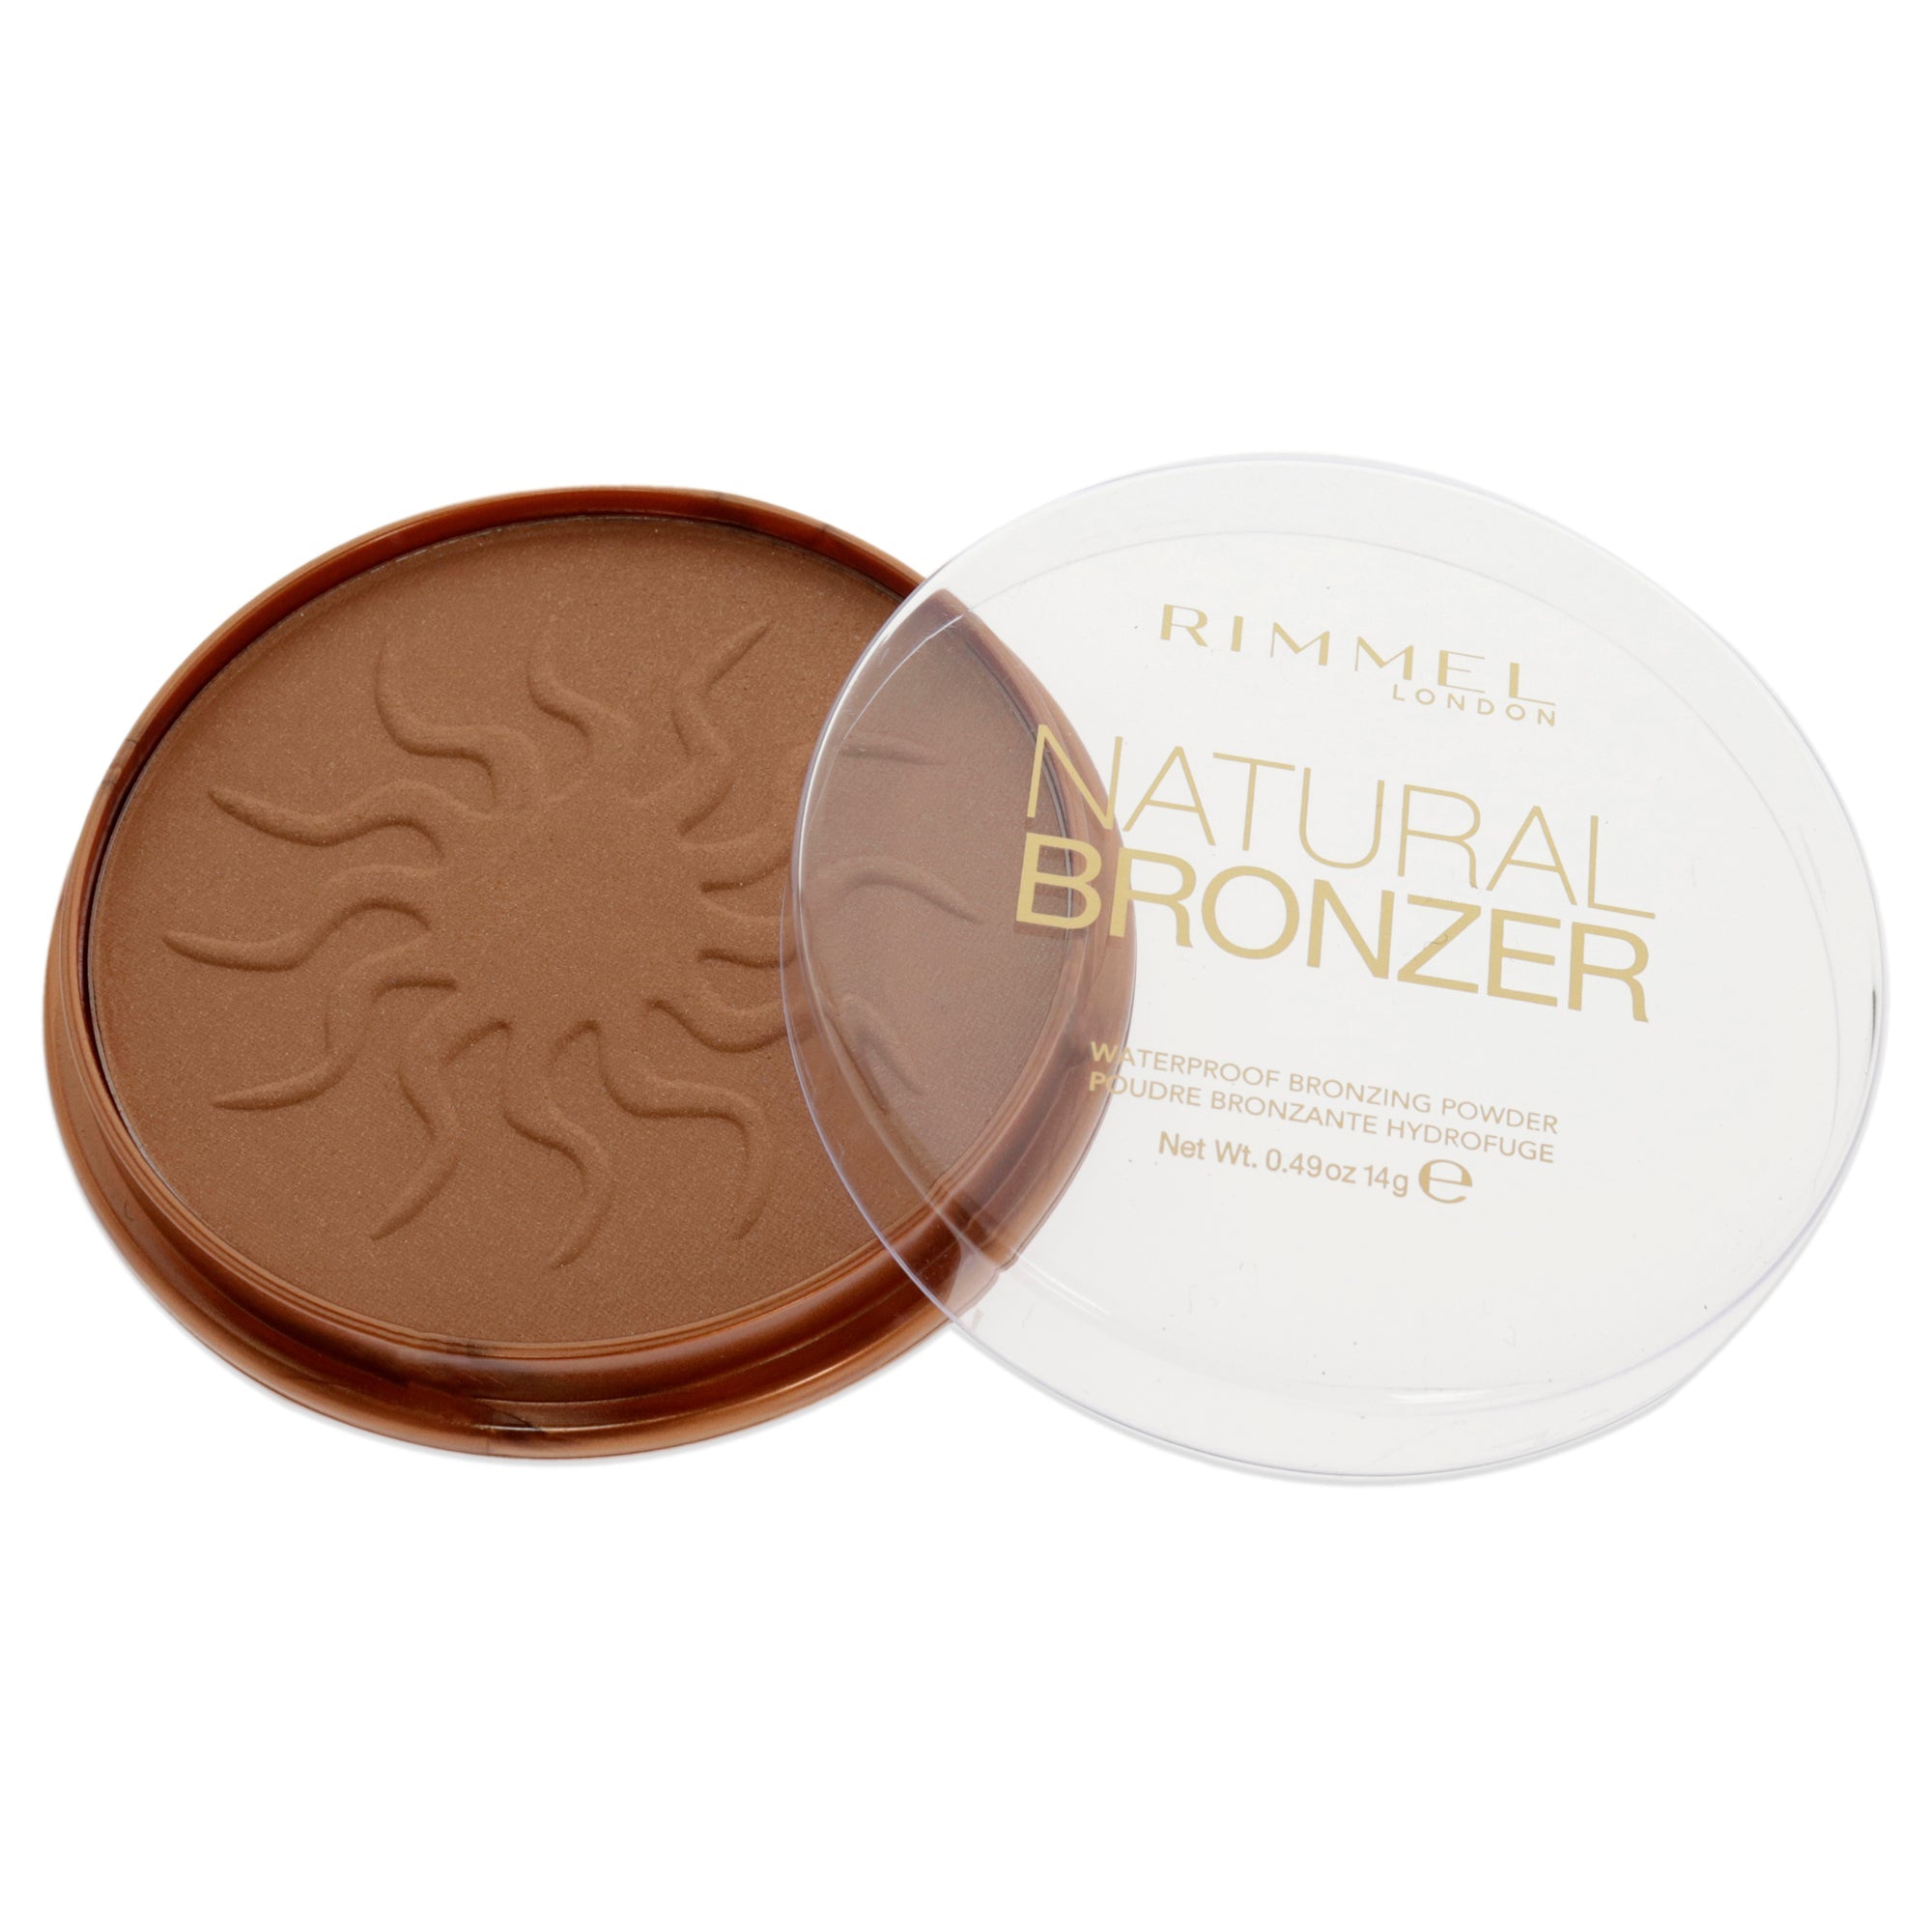 Natural Bronzer - 027 by Rimmel London for Women - 0.49 oz B